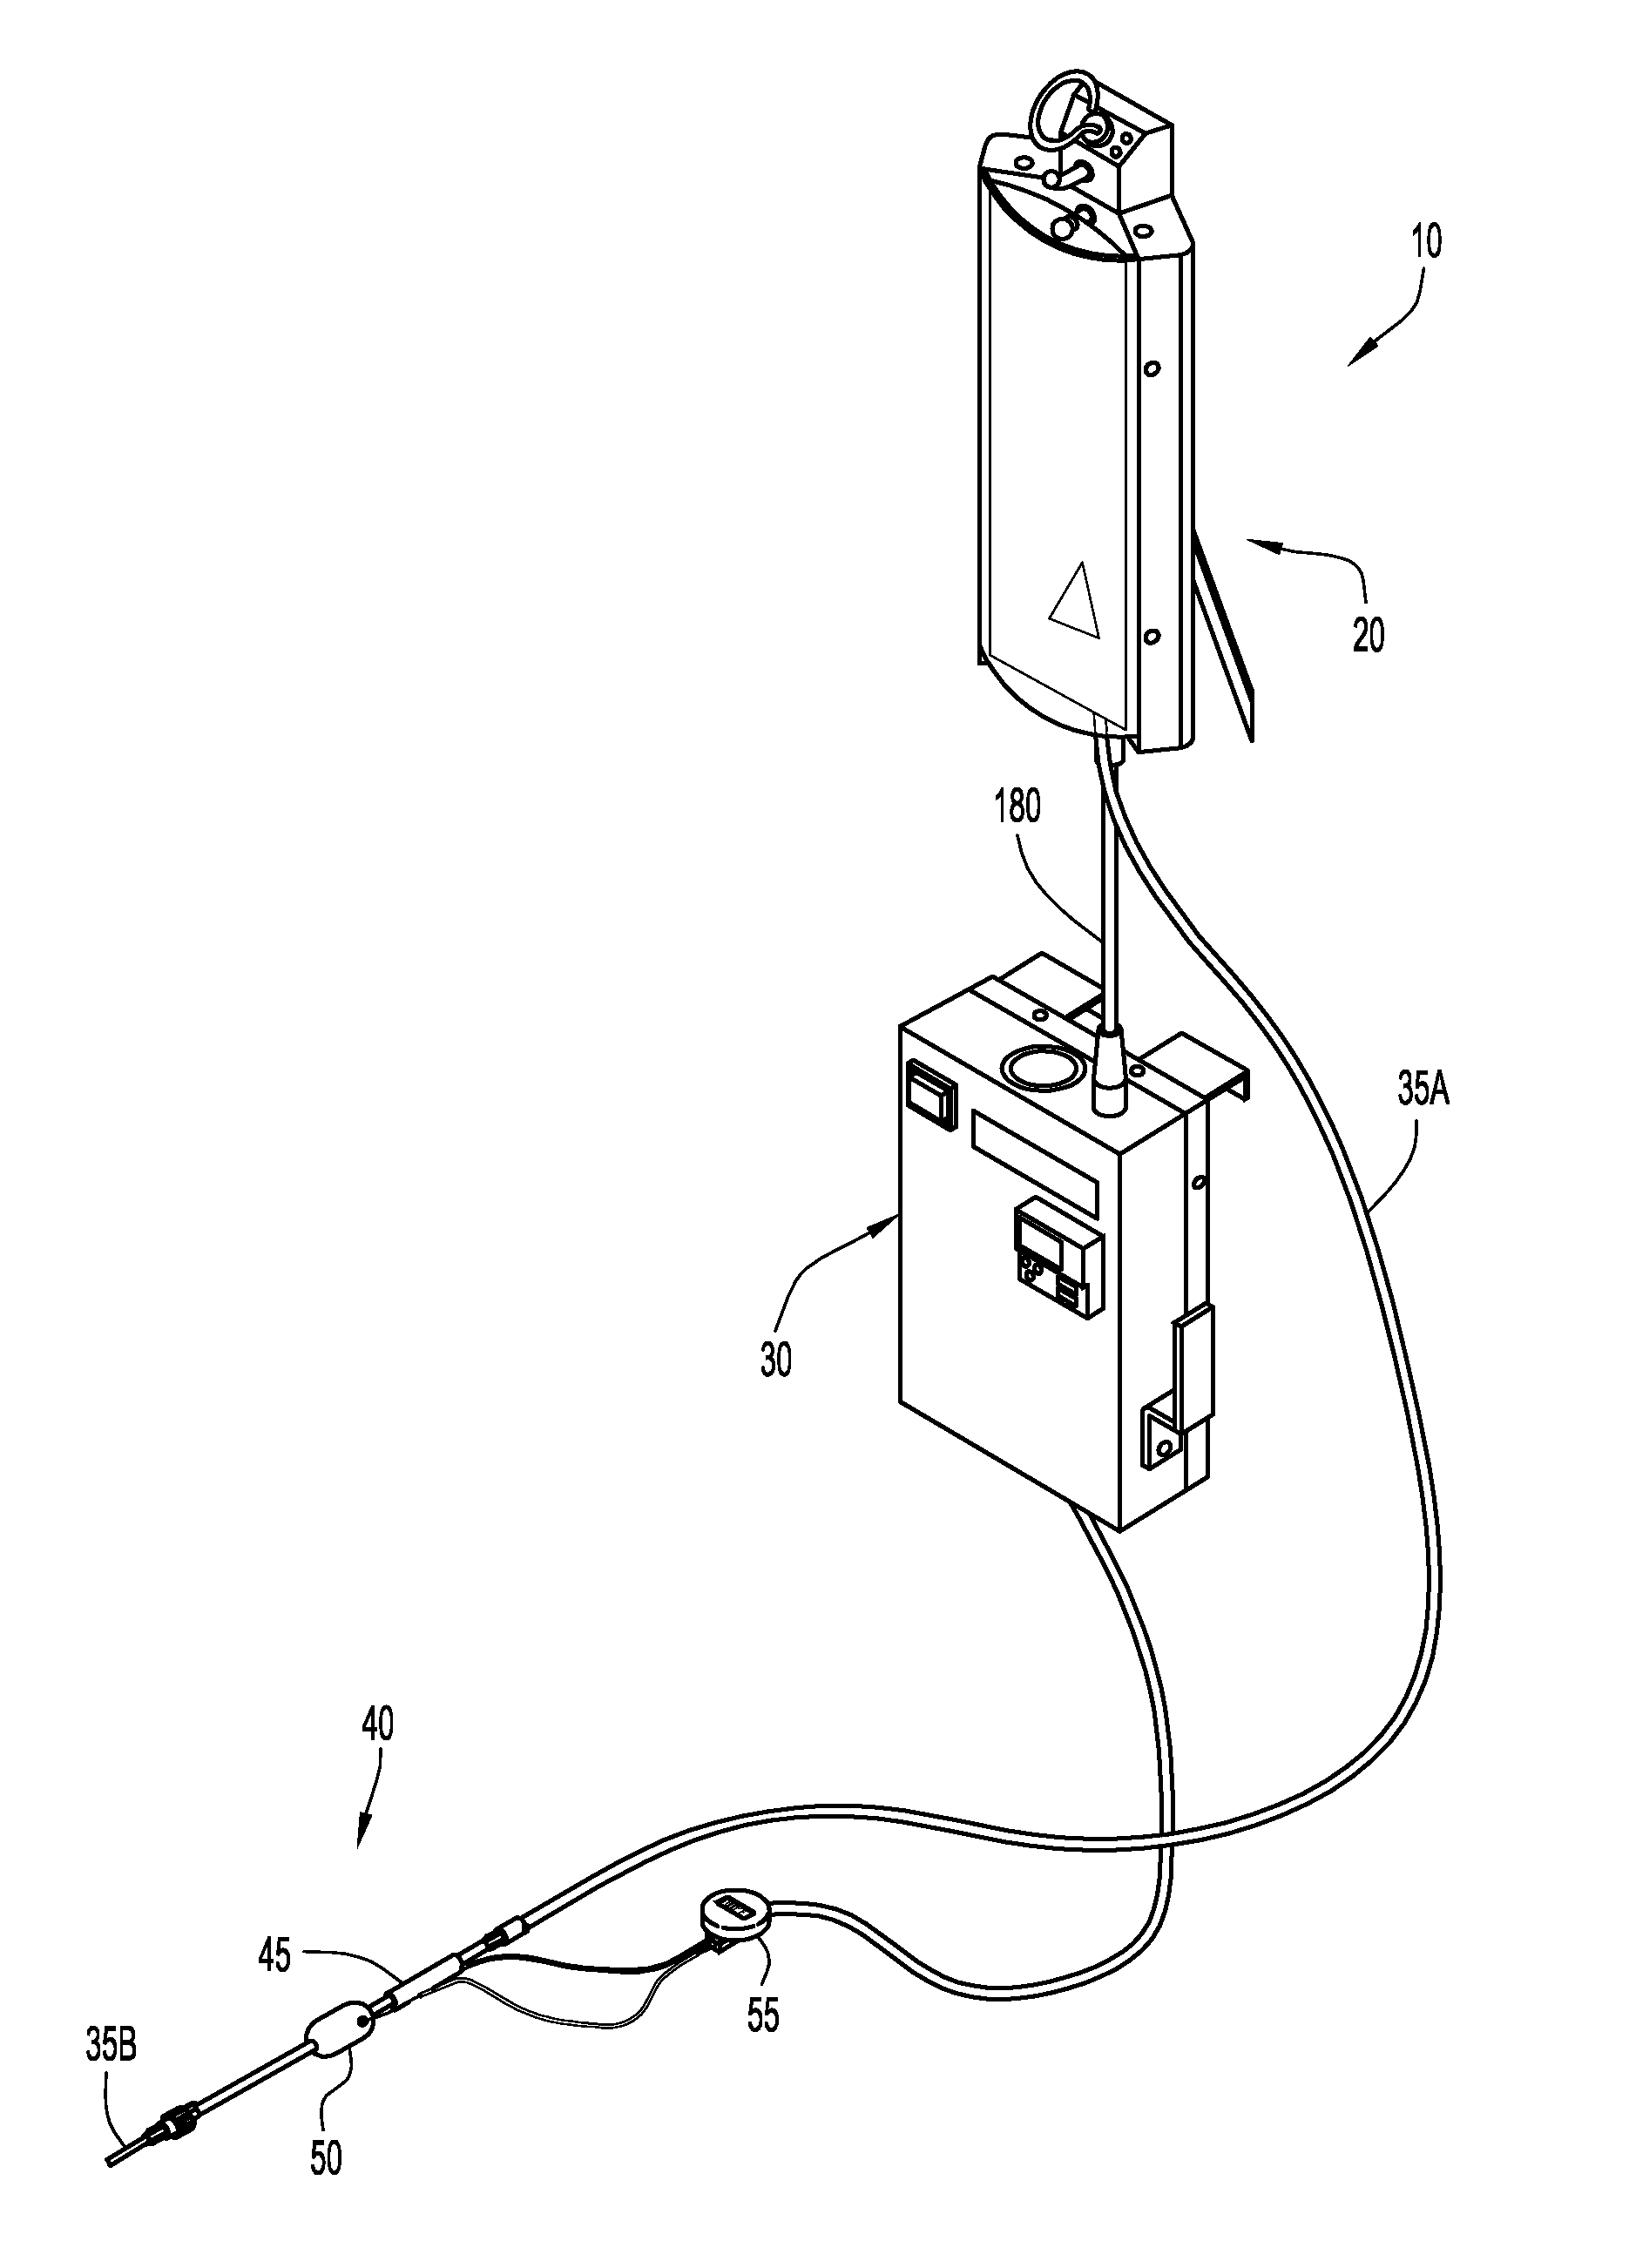 Method and Apparatus for Controlling Temperature of Medical Liquids